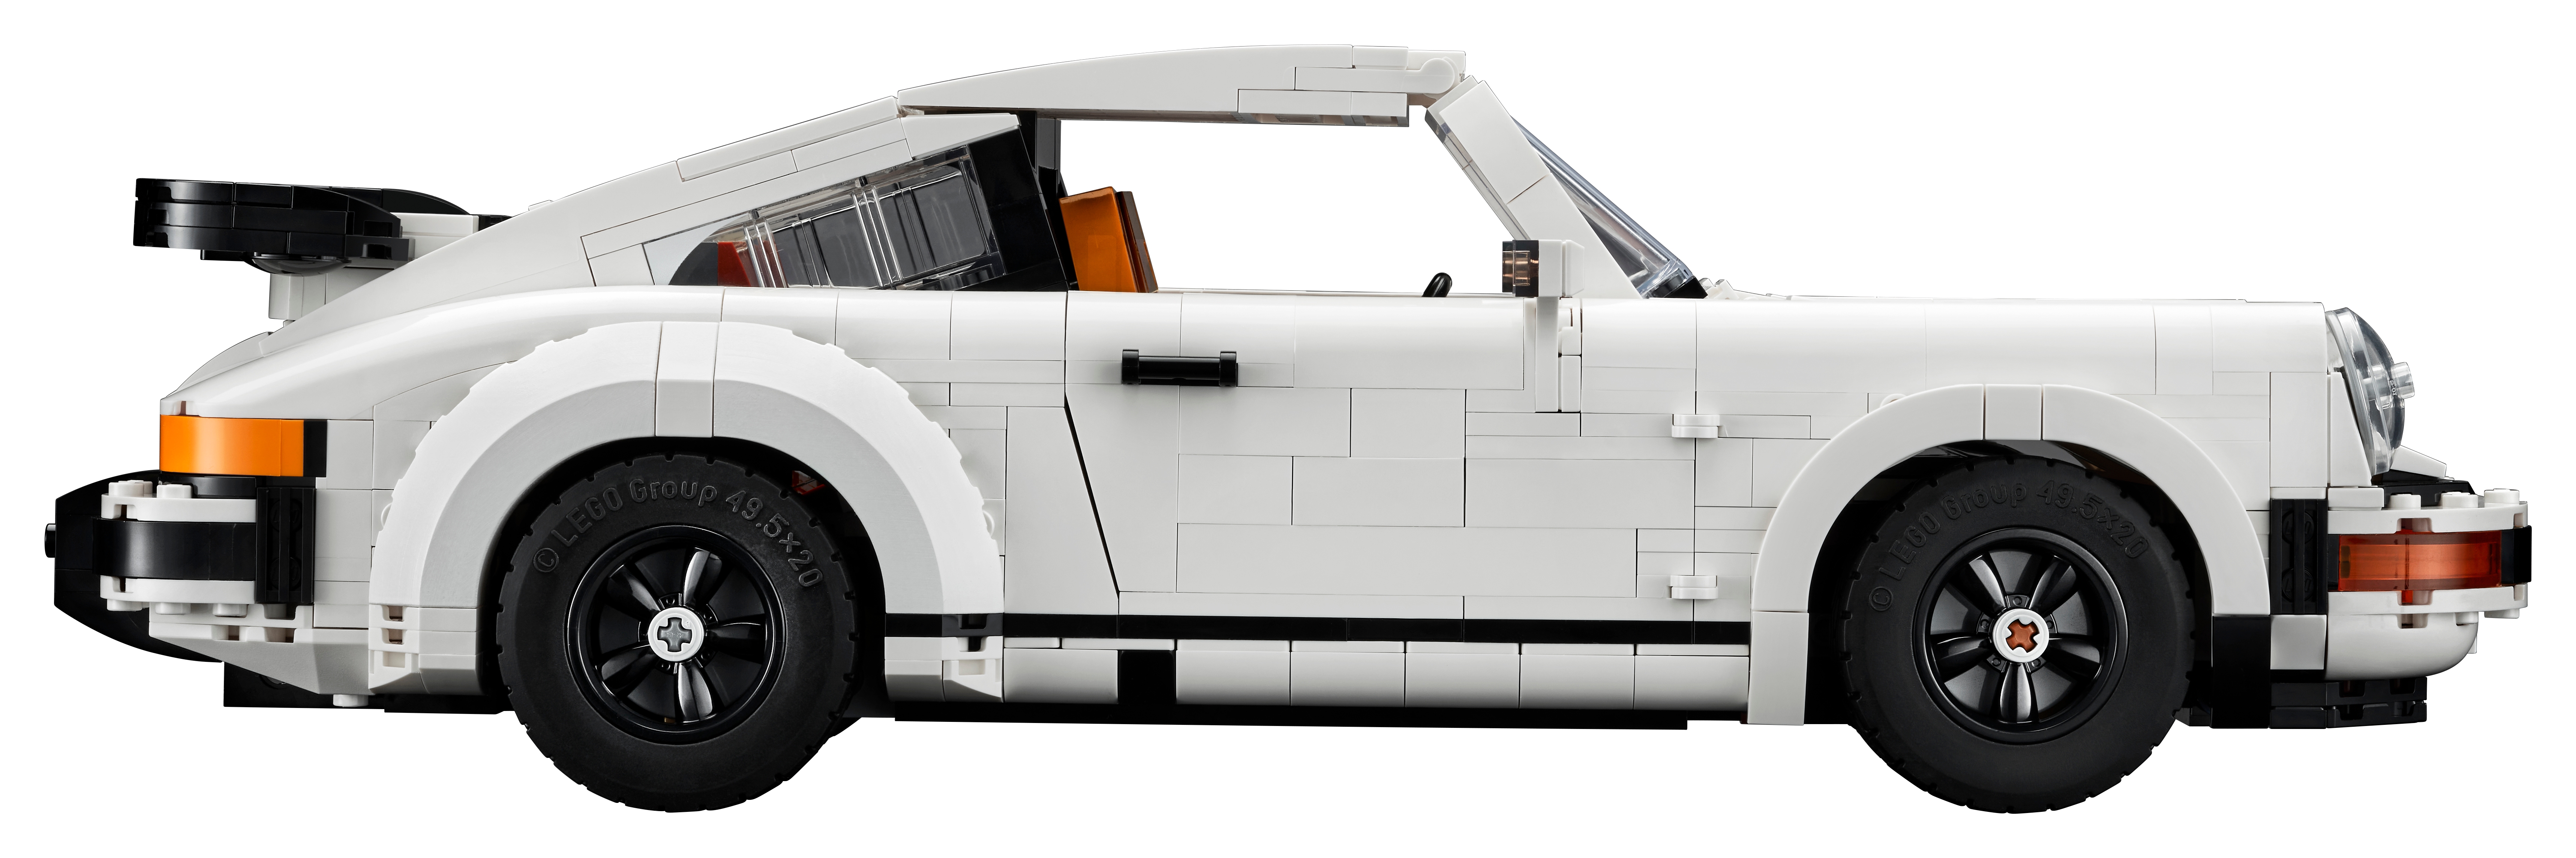 LEGO® Creator Set 911 Turbo and 911 Targa